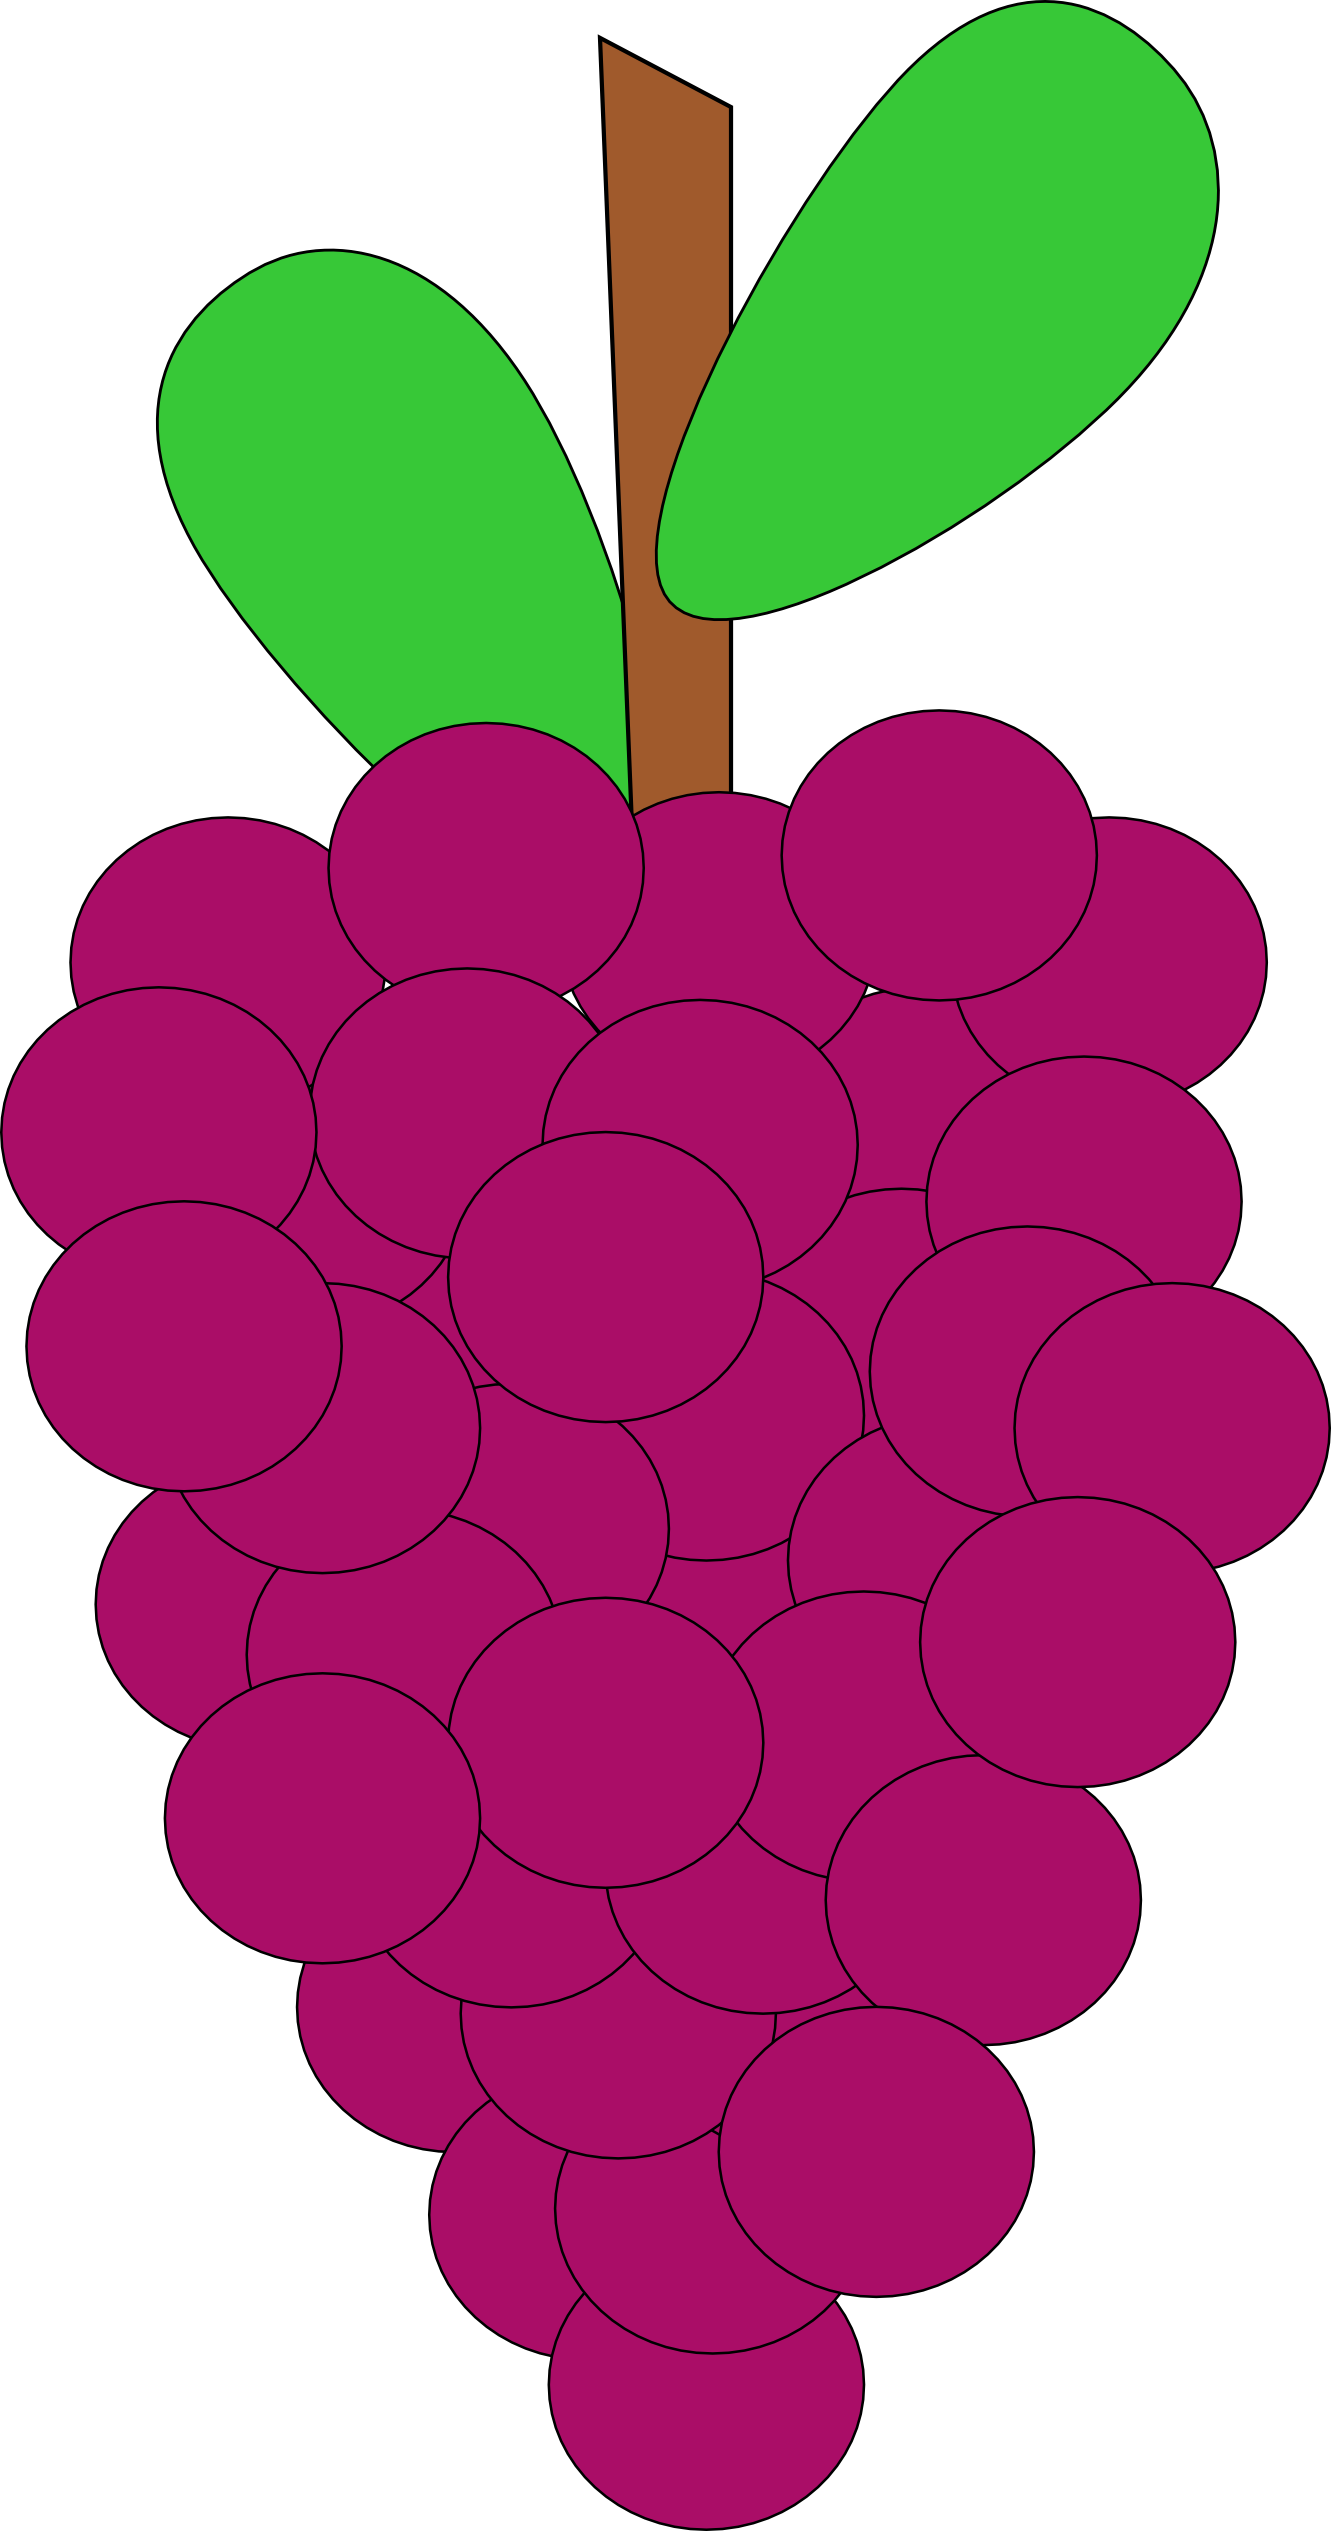 Grapes clipart